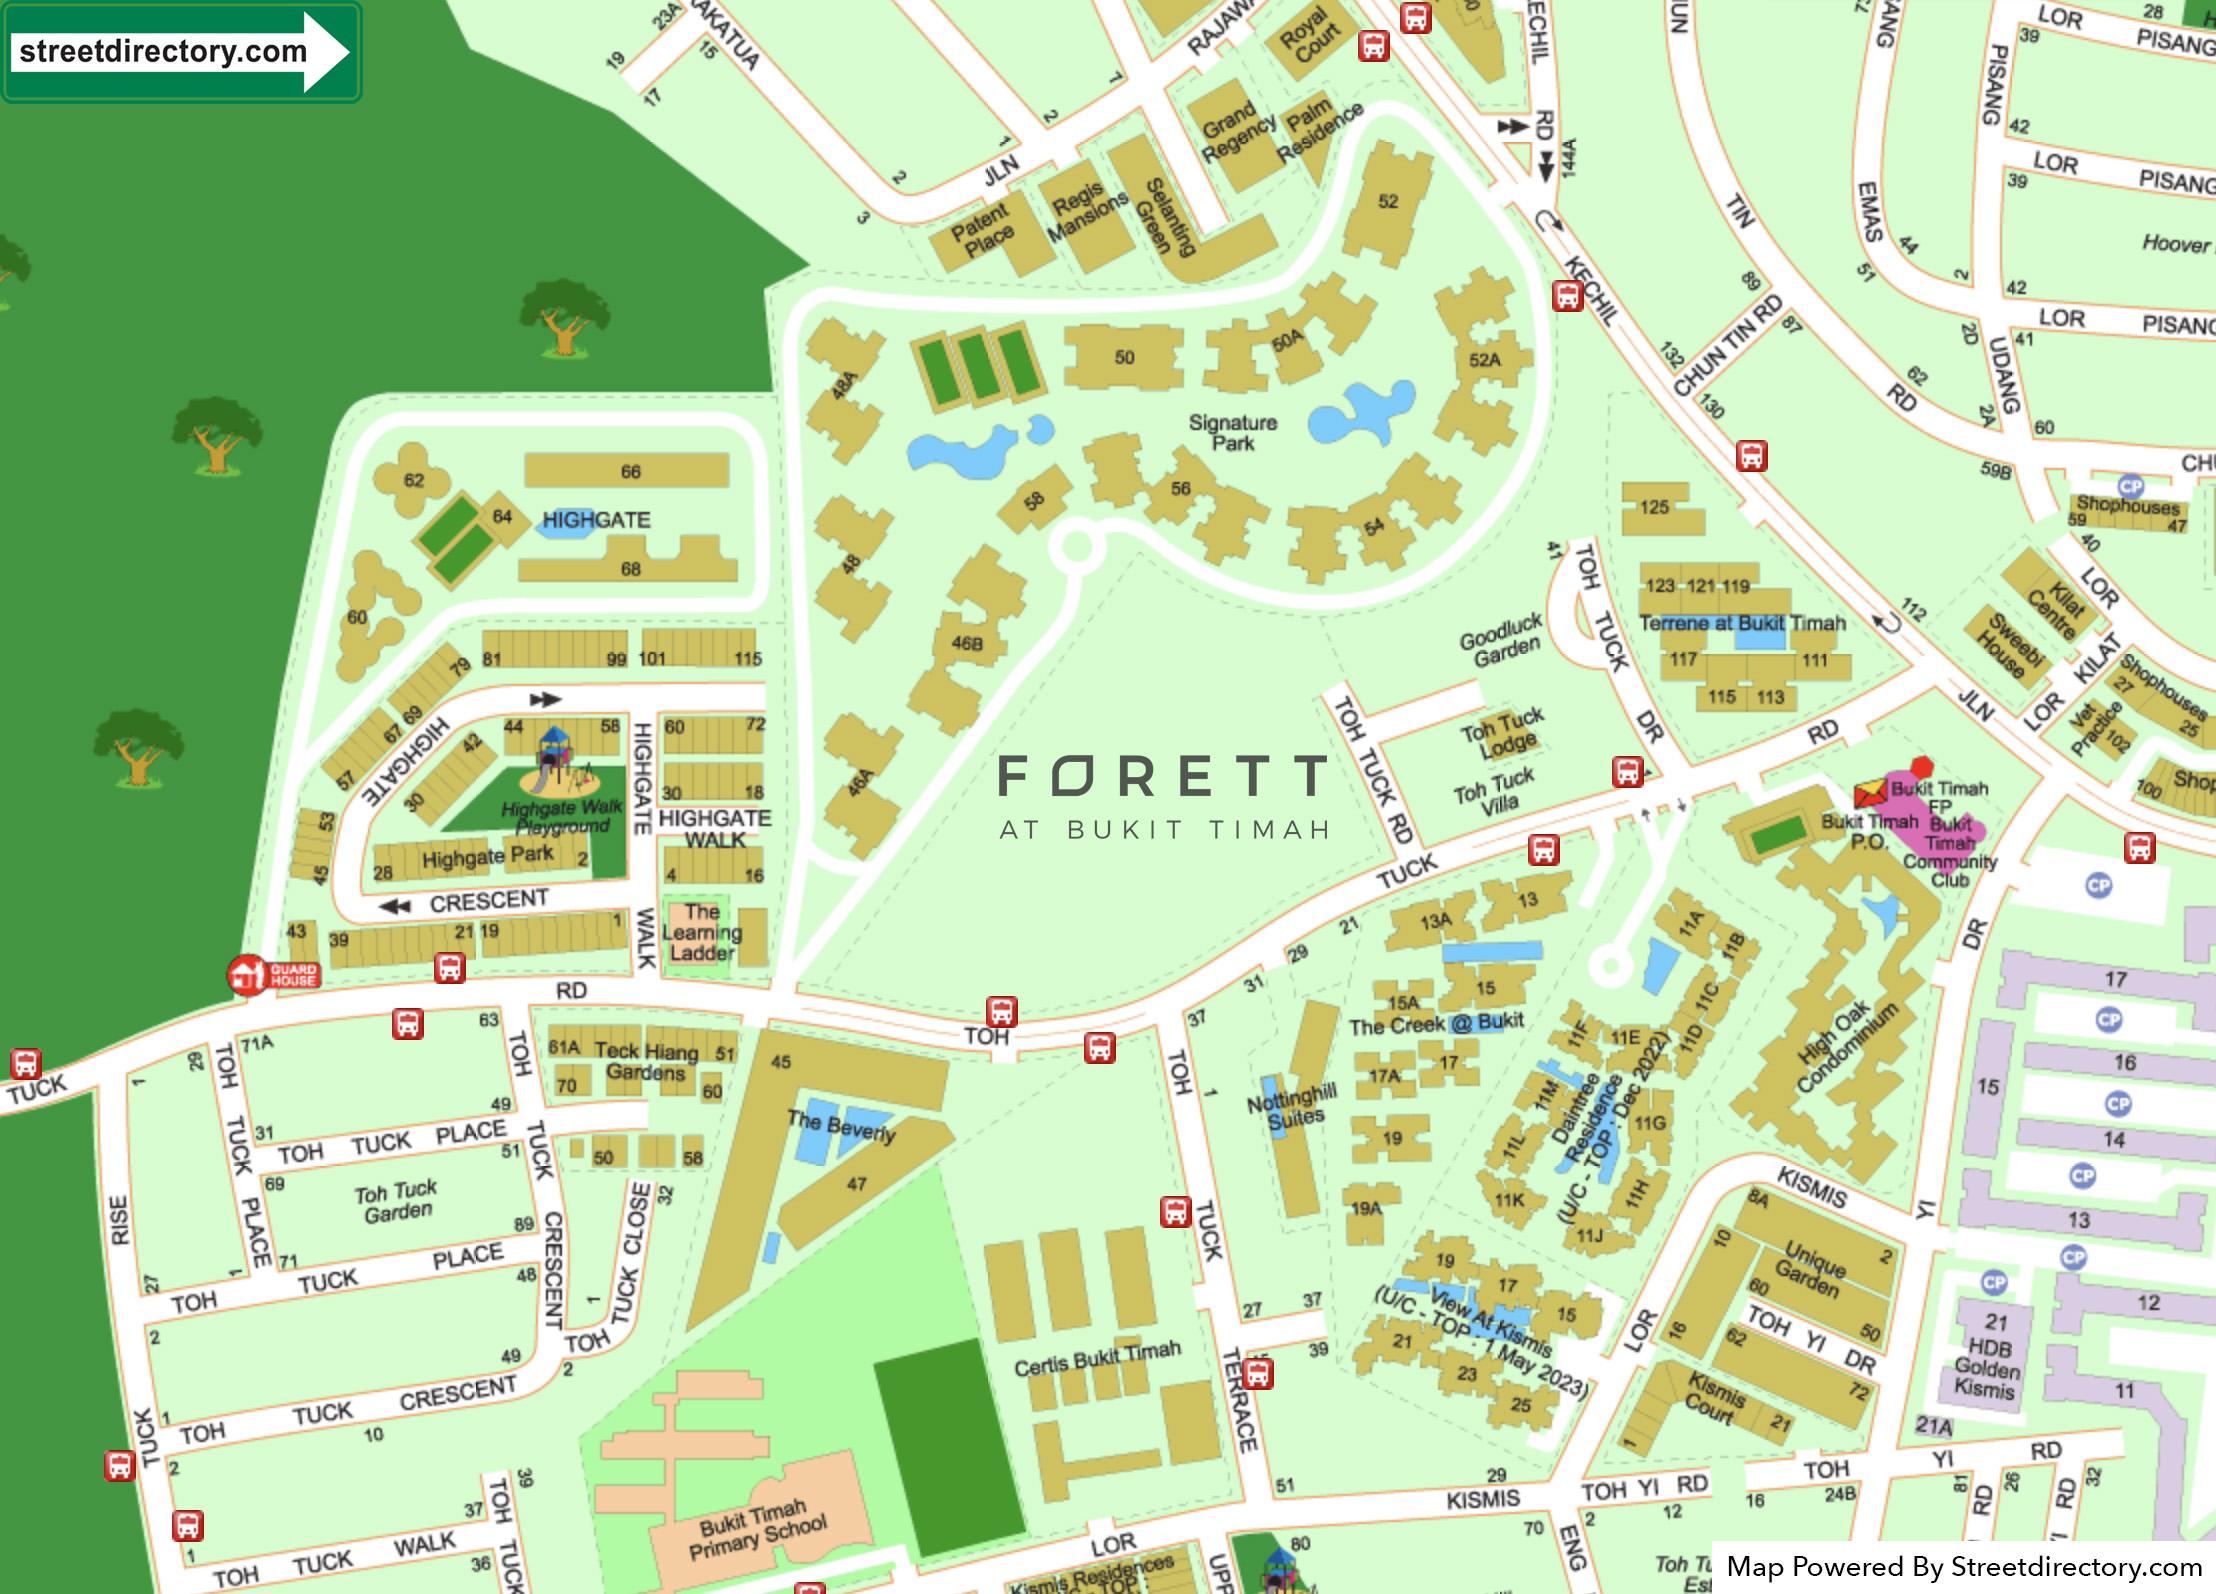 new-condo-singapore-forett-at-bukit-timah-street-directory-map